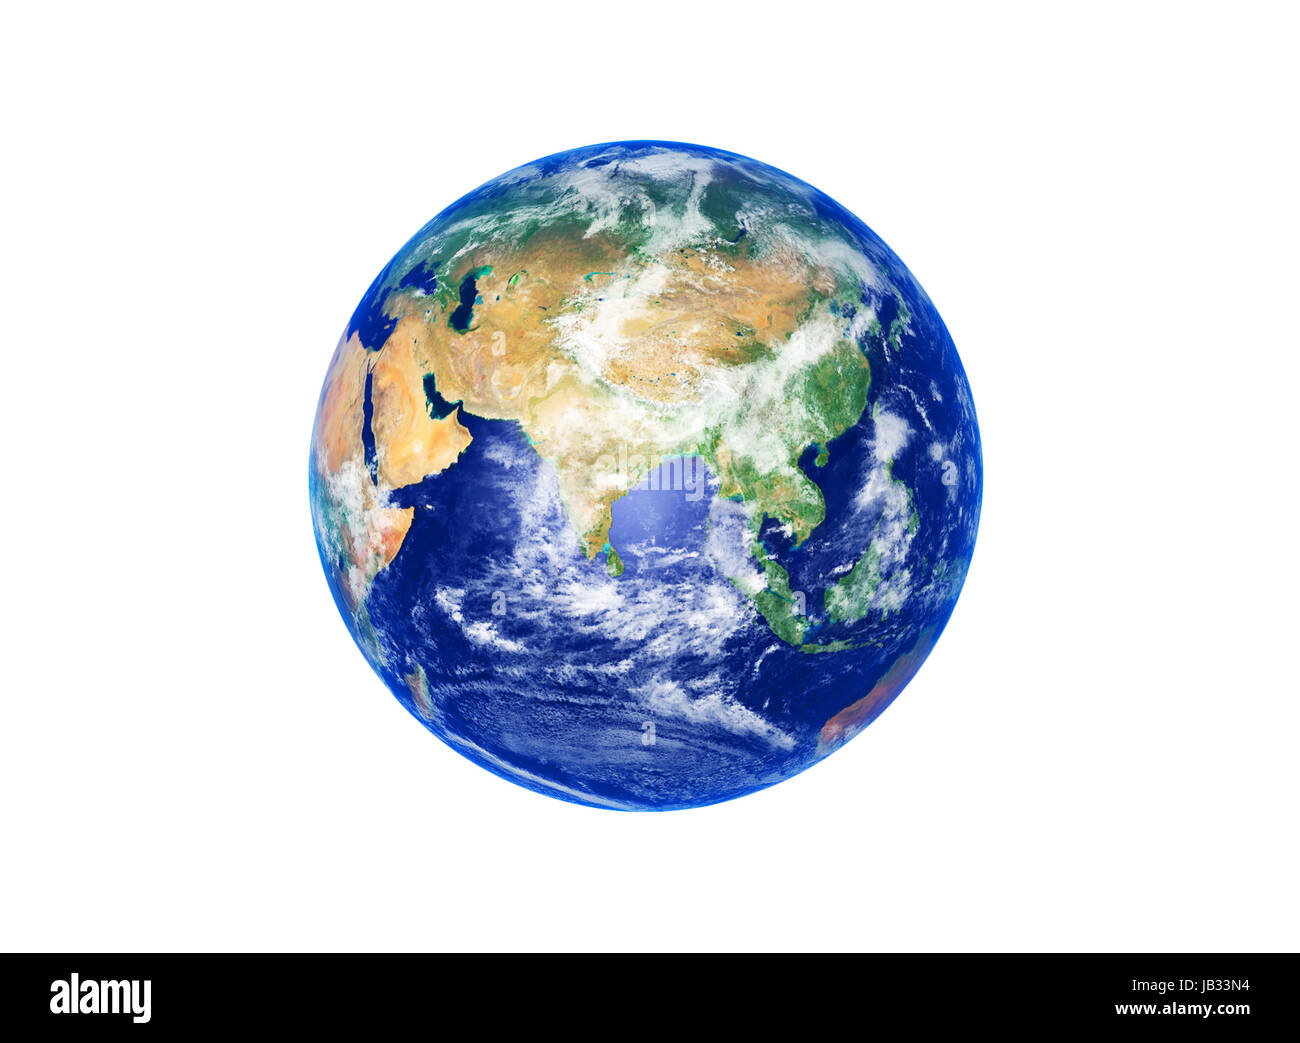 Earth Globe Asia High Resolution Image Stock Photo 144512960 Alamy